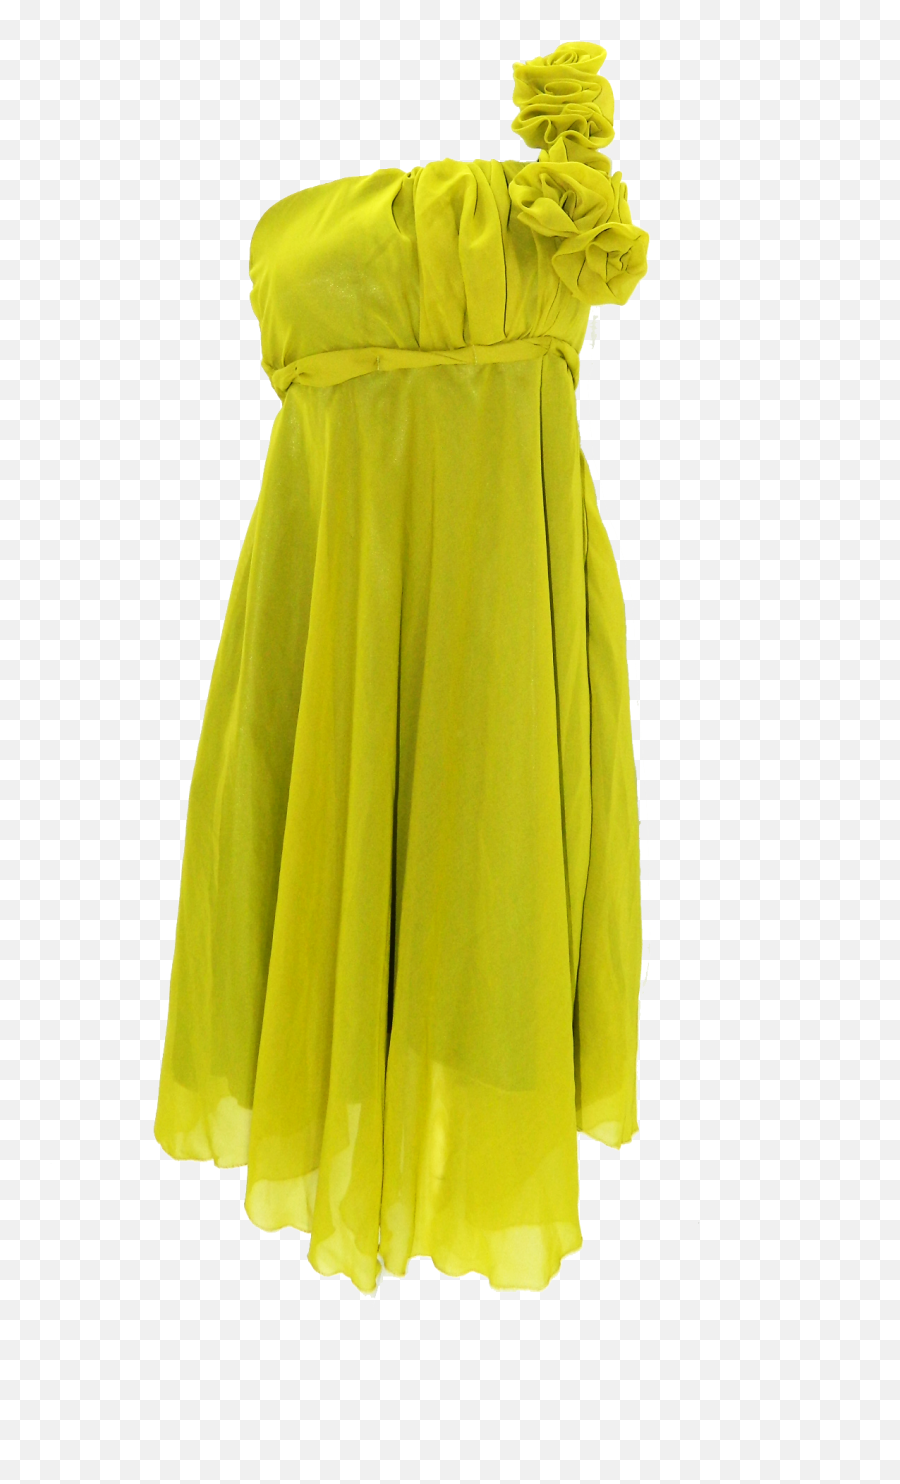 Download Free Png Dresses Png 26105 - Free Icons And Png Transparent Background Dress Emoji,Emoji Dresses